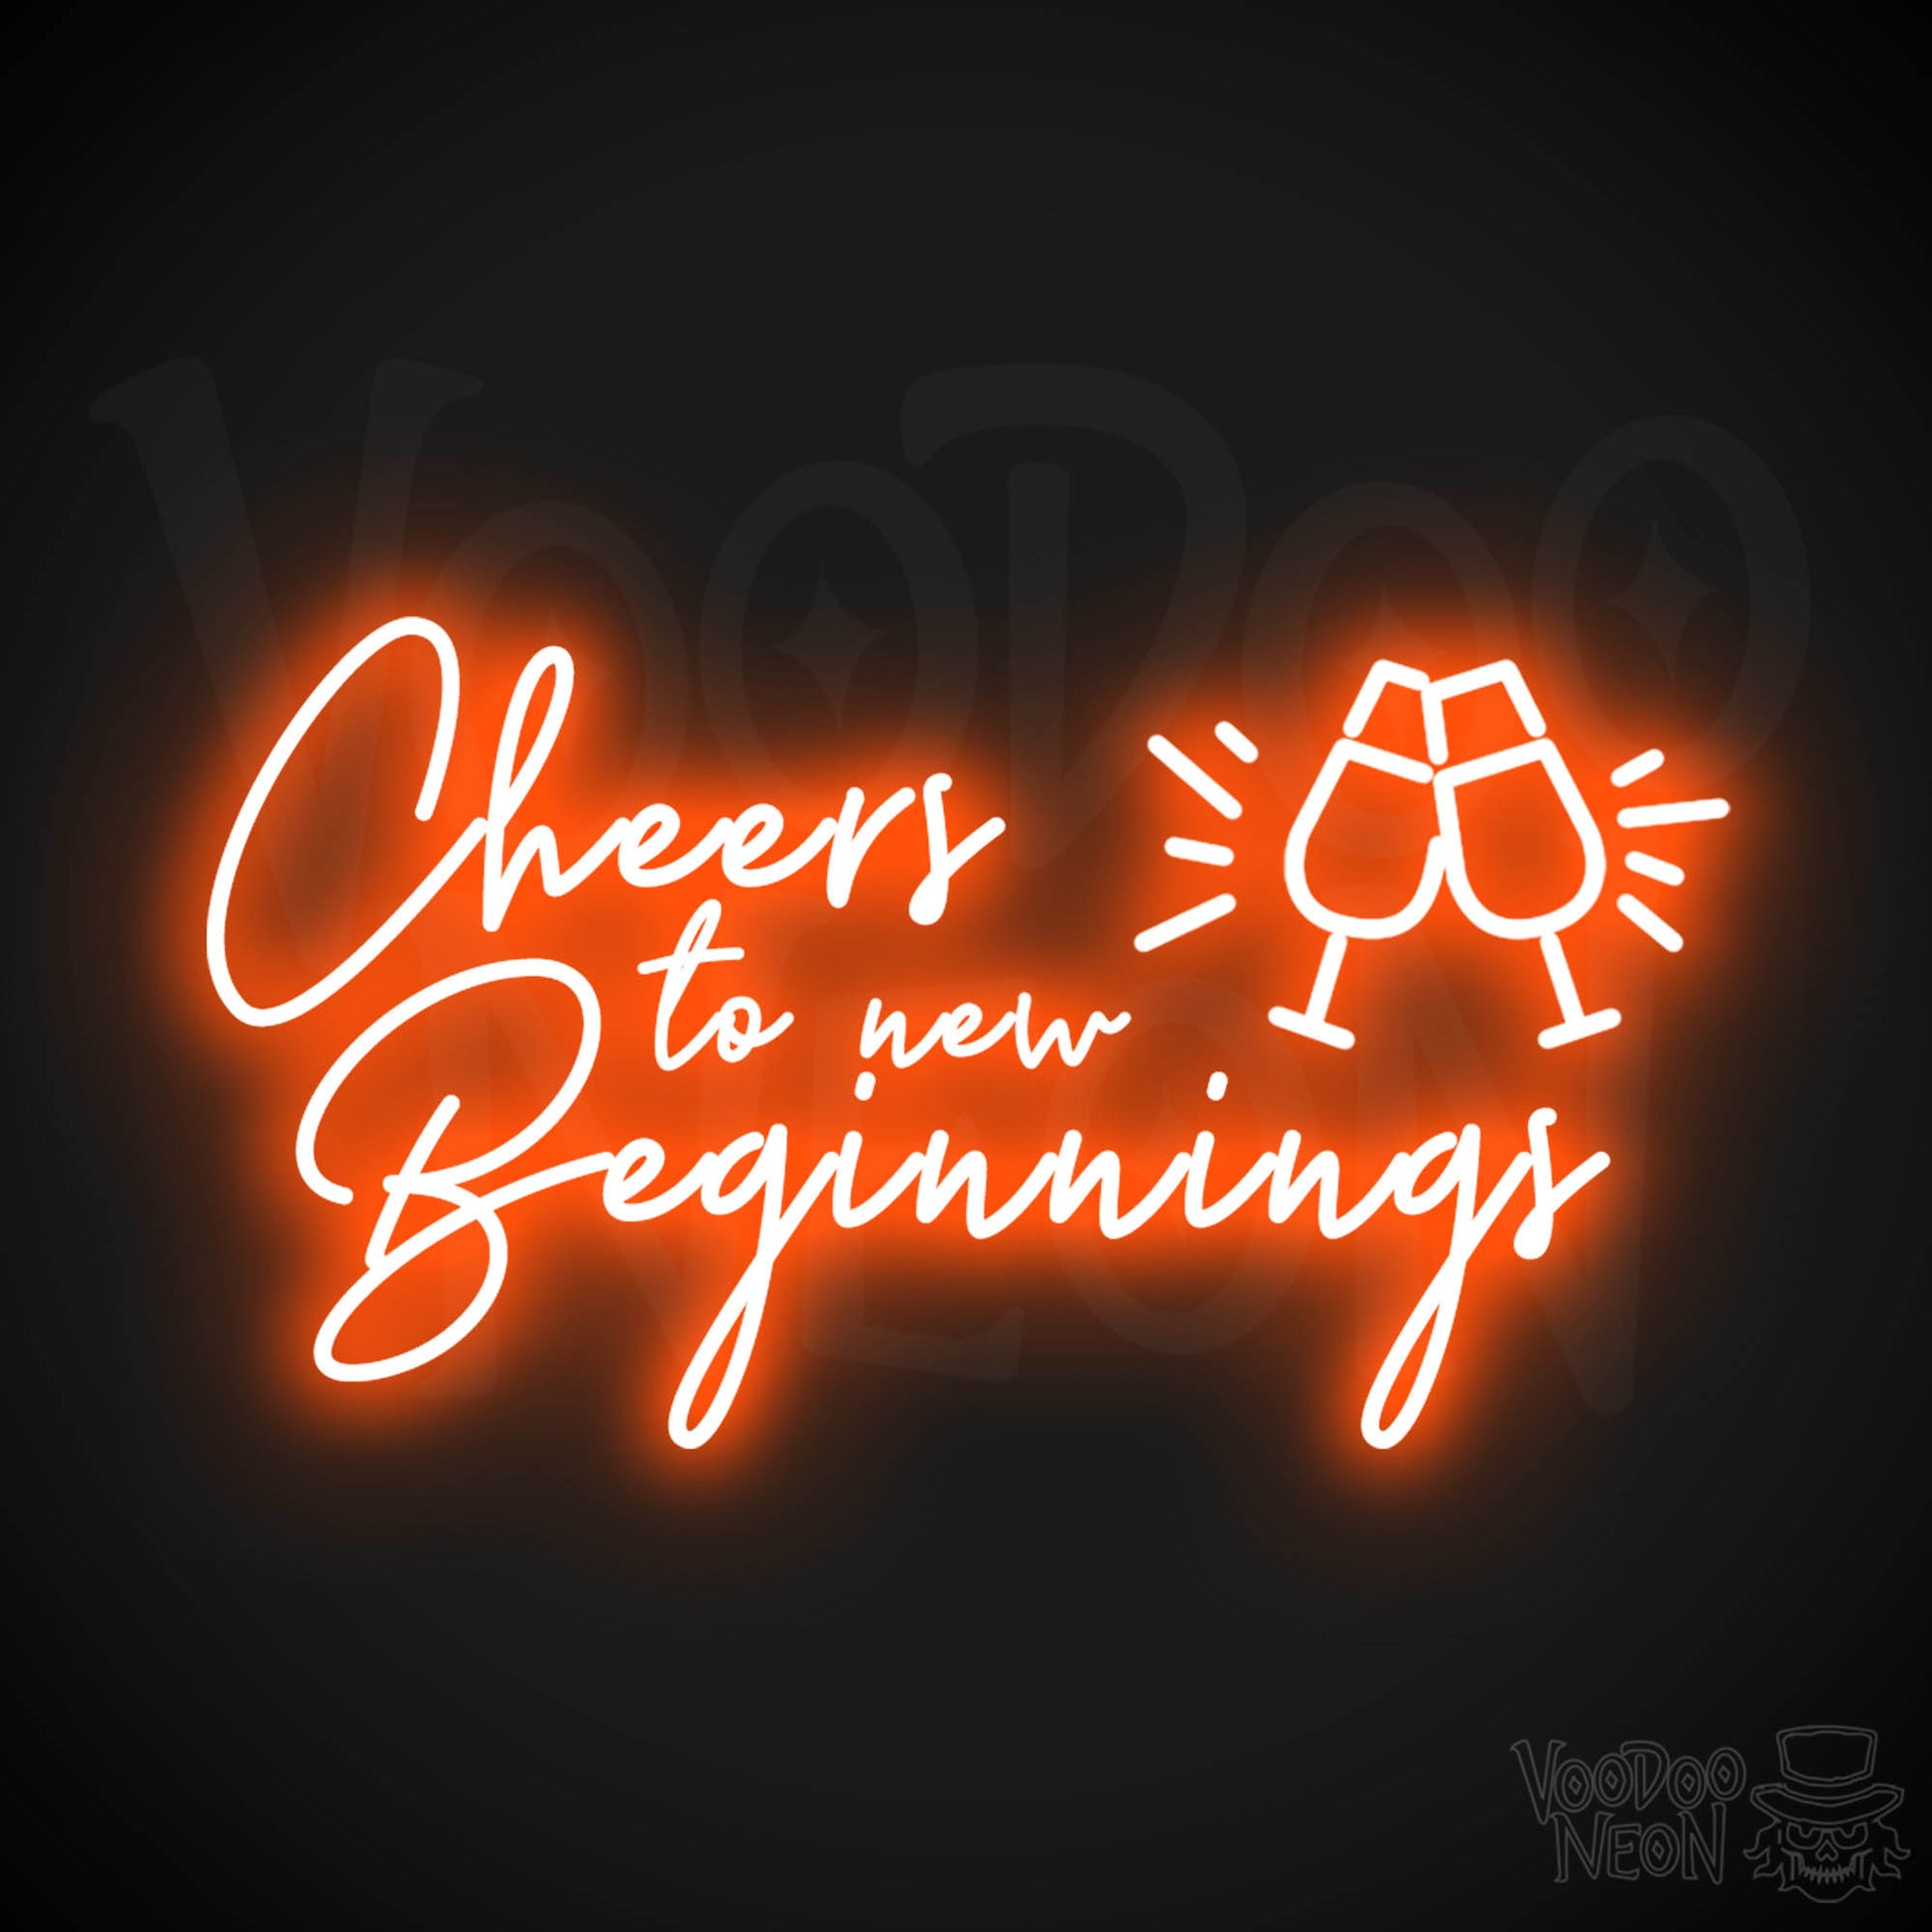 Cheers To New Beginnings Neon Sign - Neon Cheers To New Beginnings Sign - Color Orange